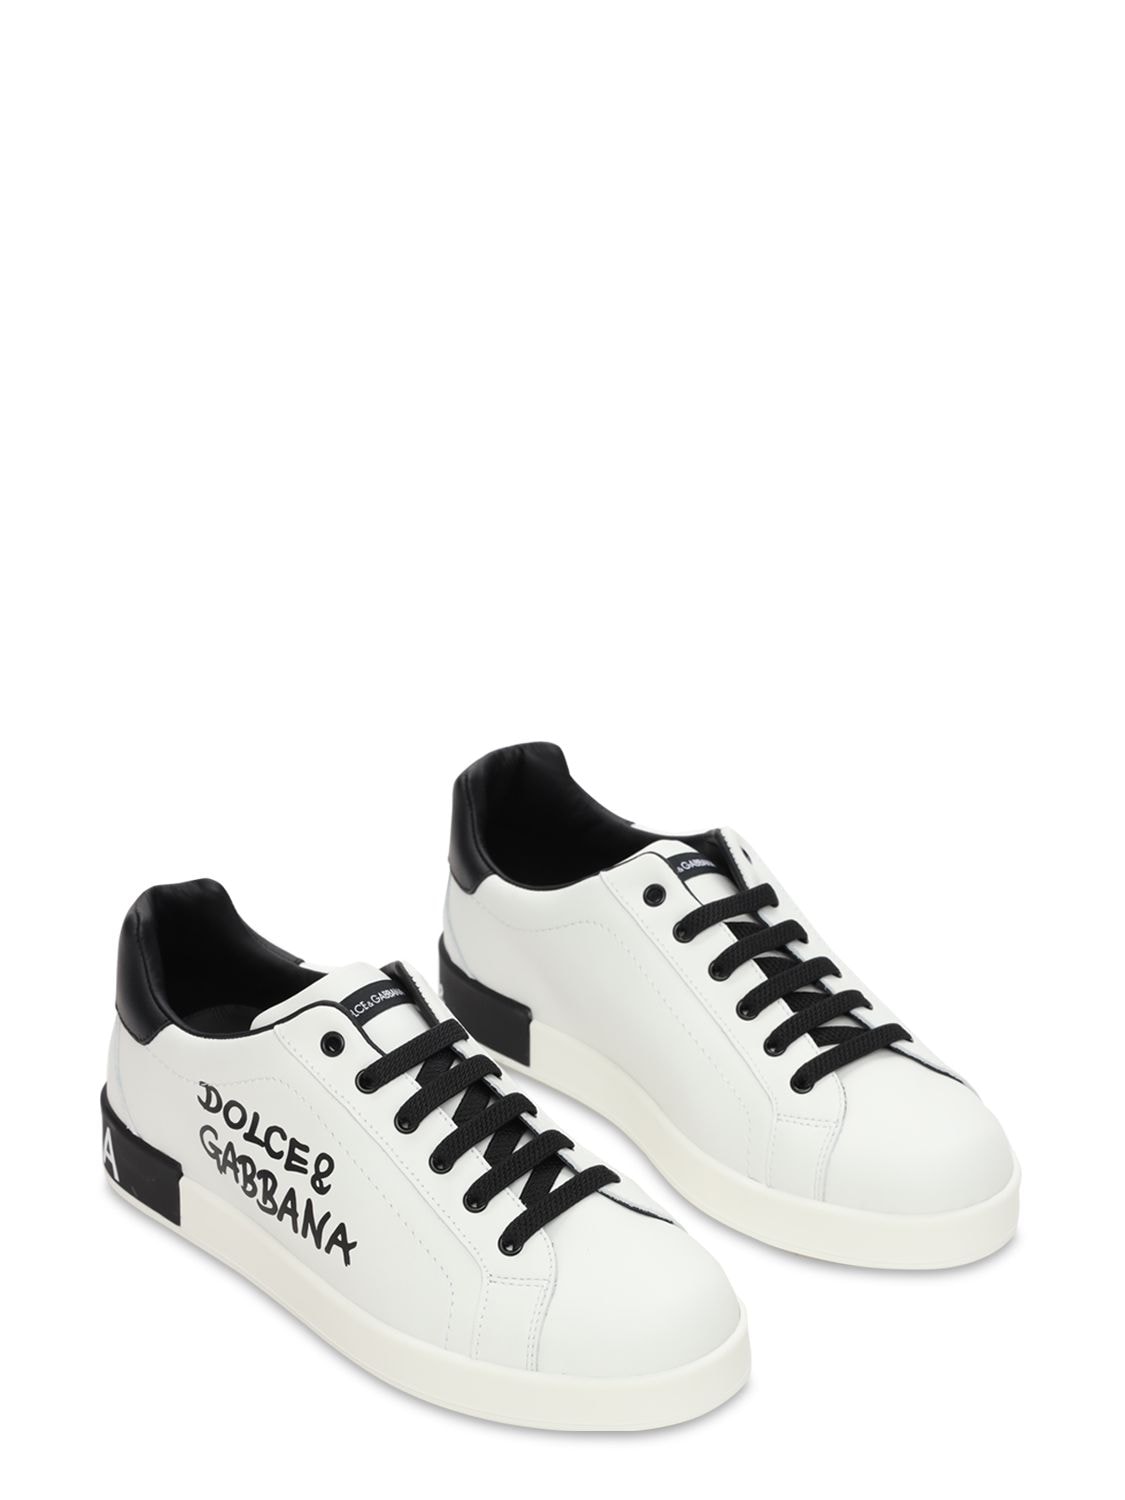 DOLCE & GABBANA LOGO皮革系带运动鞋,73I6T9009-SFDGNTC1